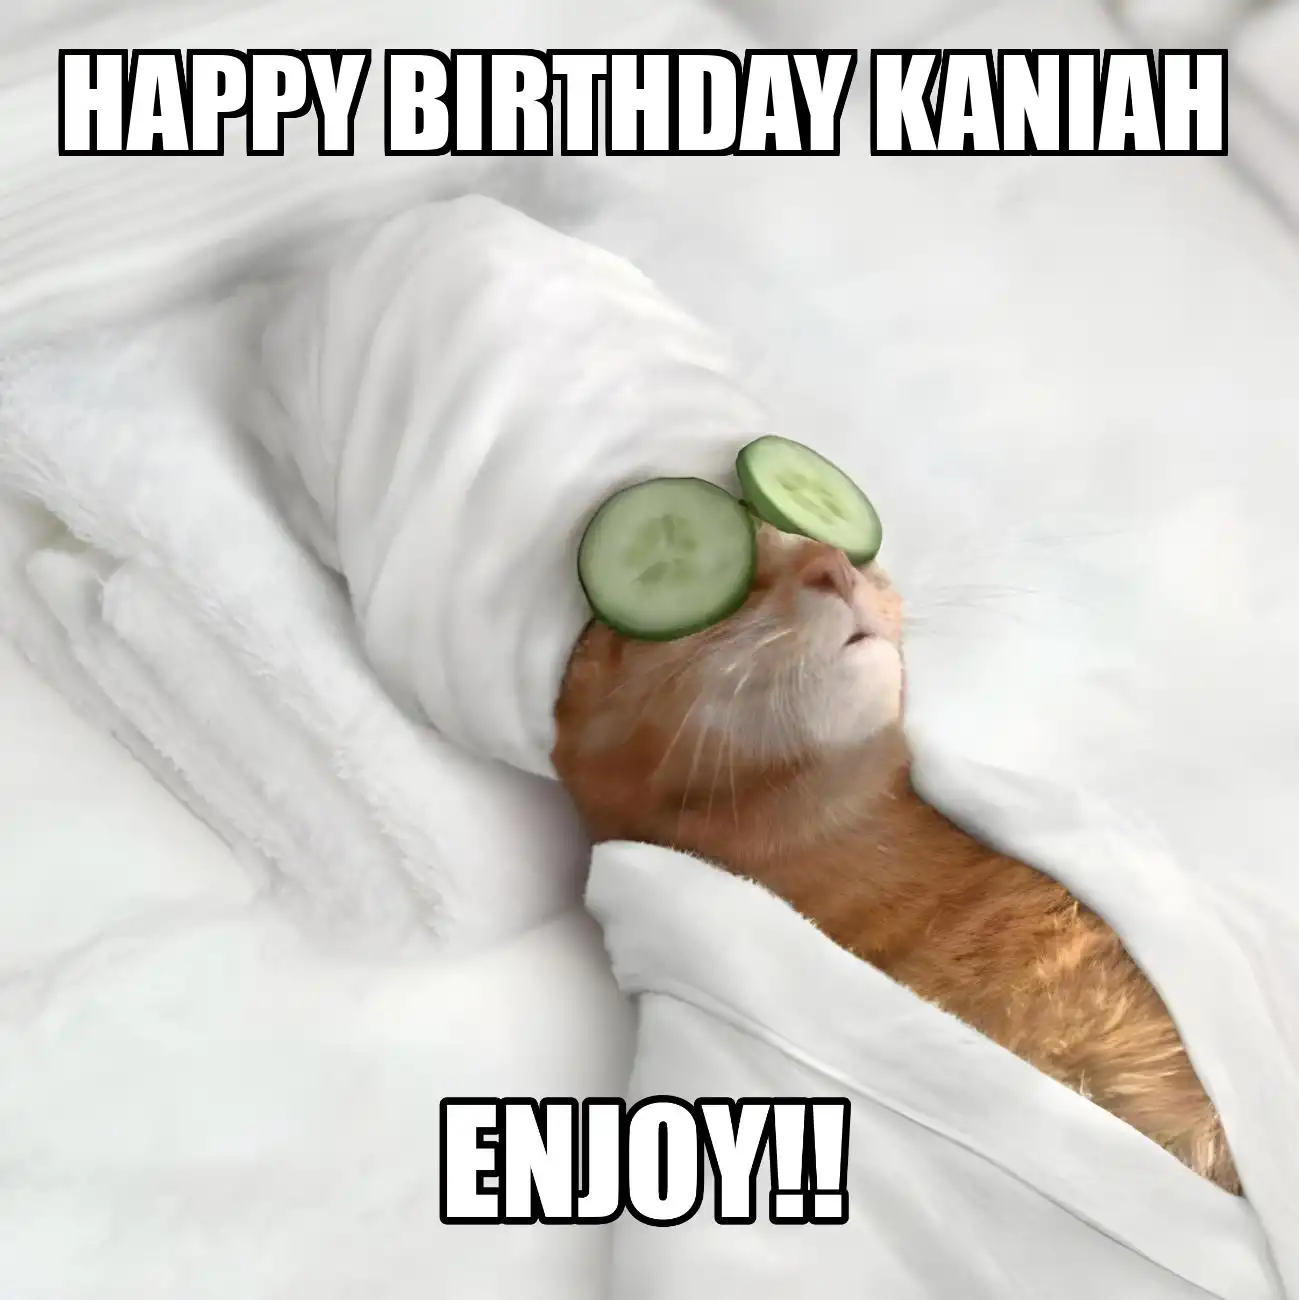 Happy Birthday Kaniah Enjoy Cat Meme